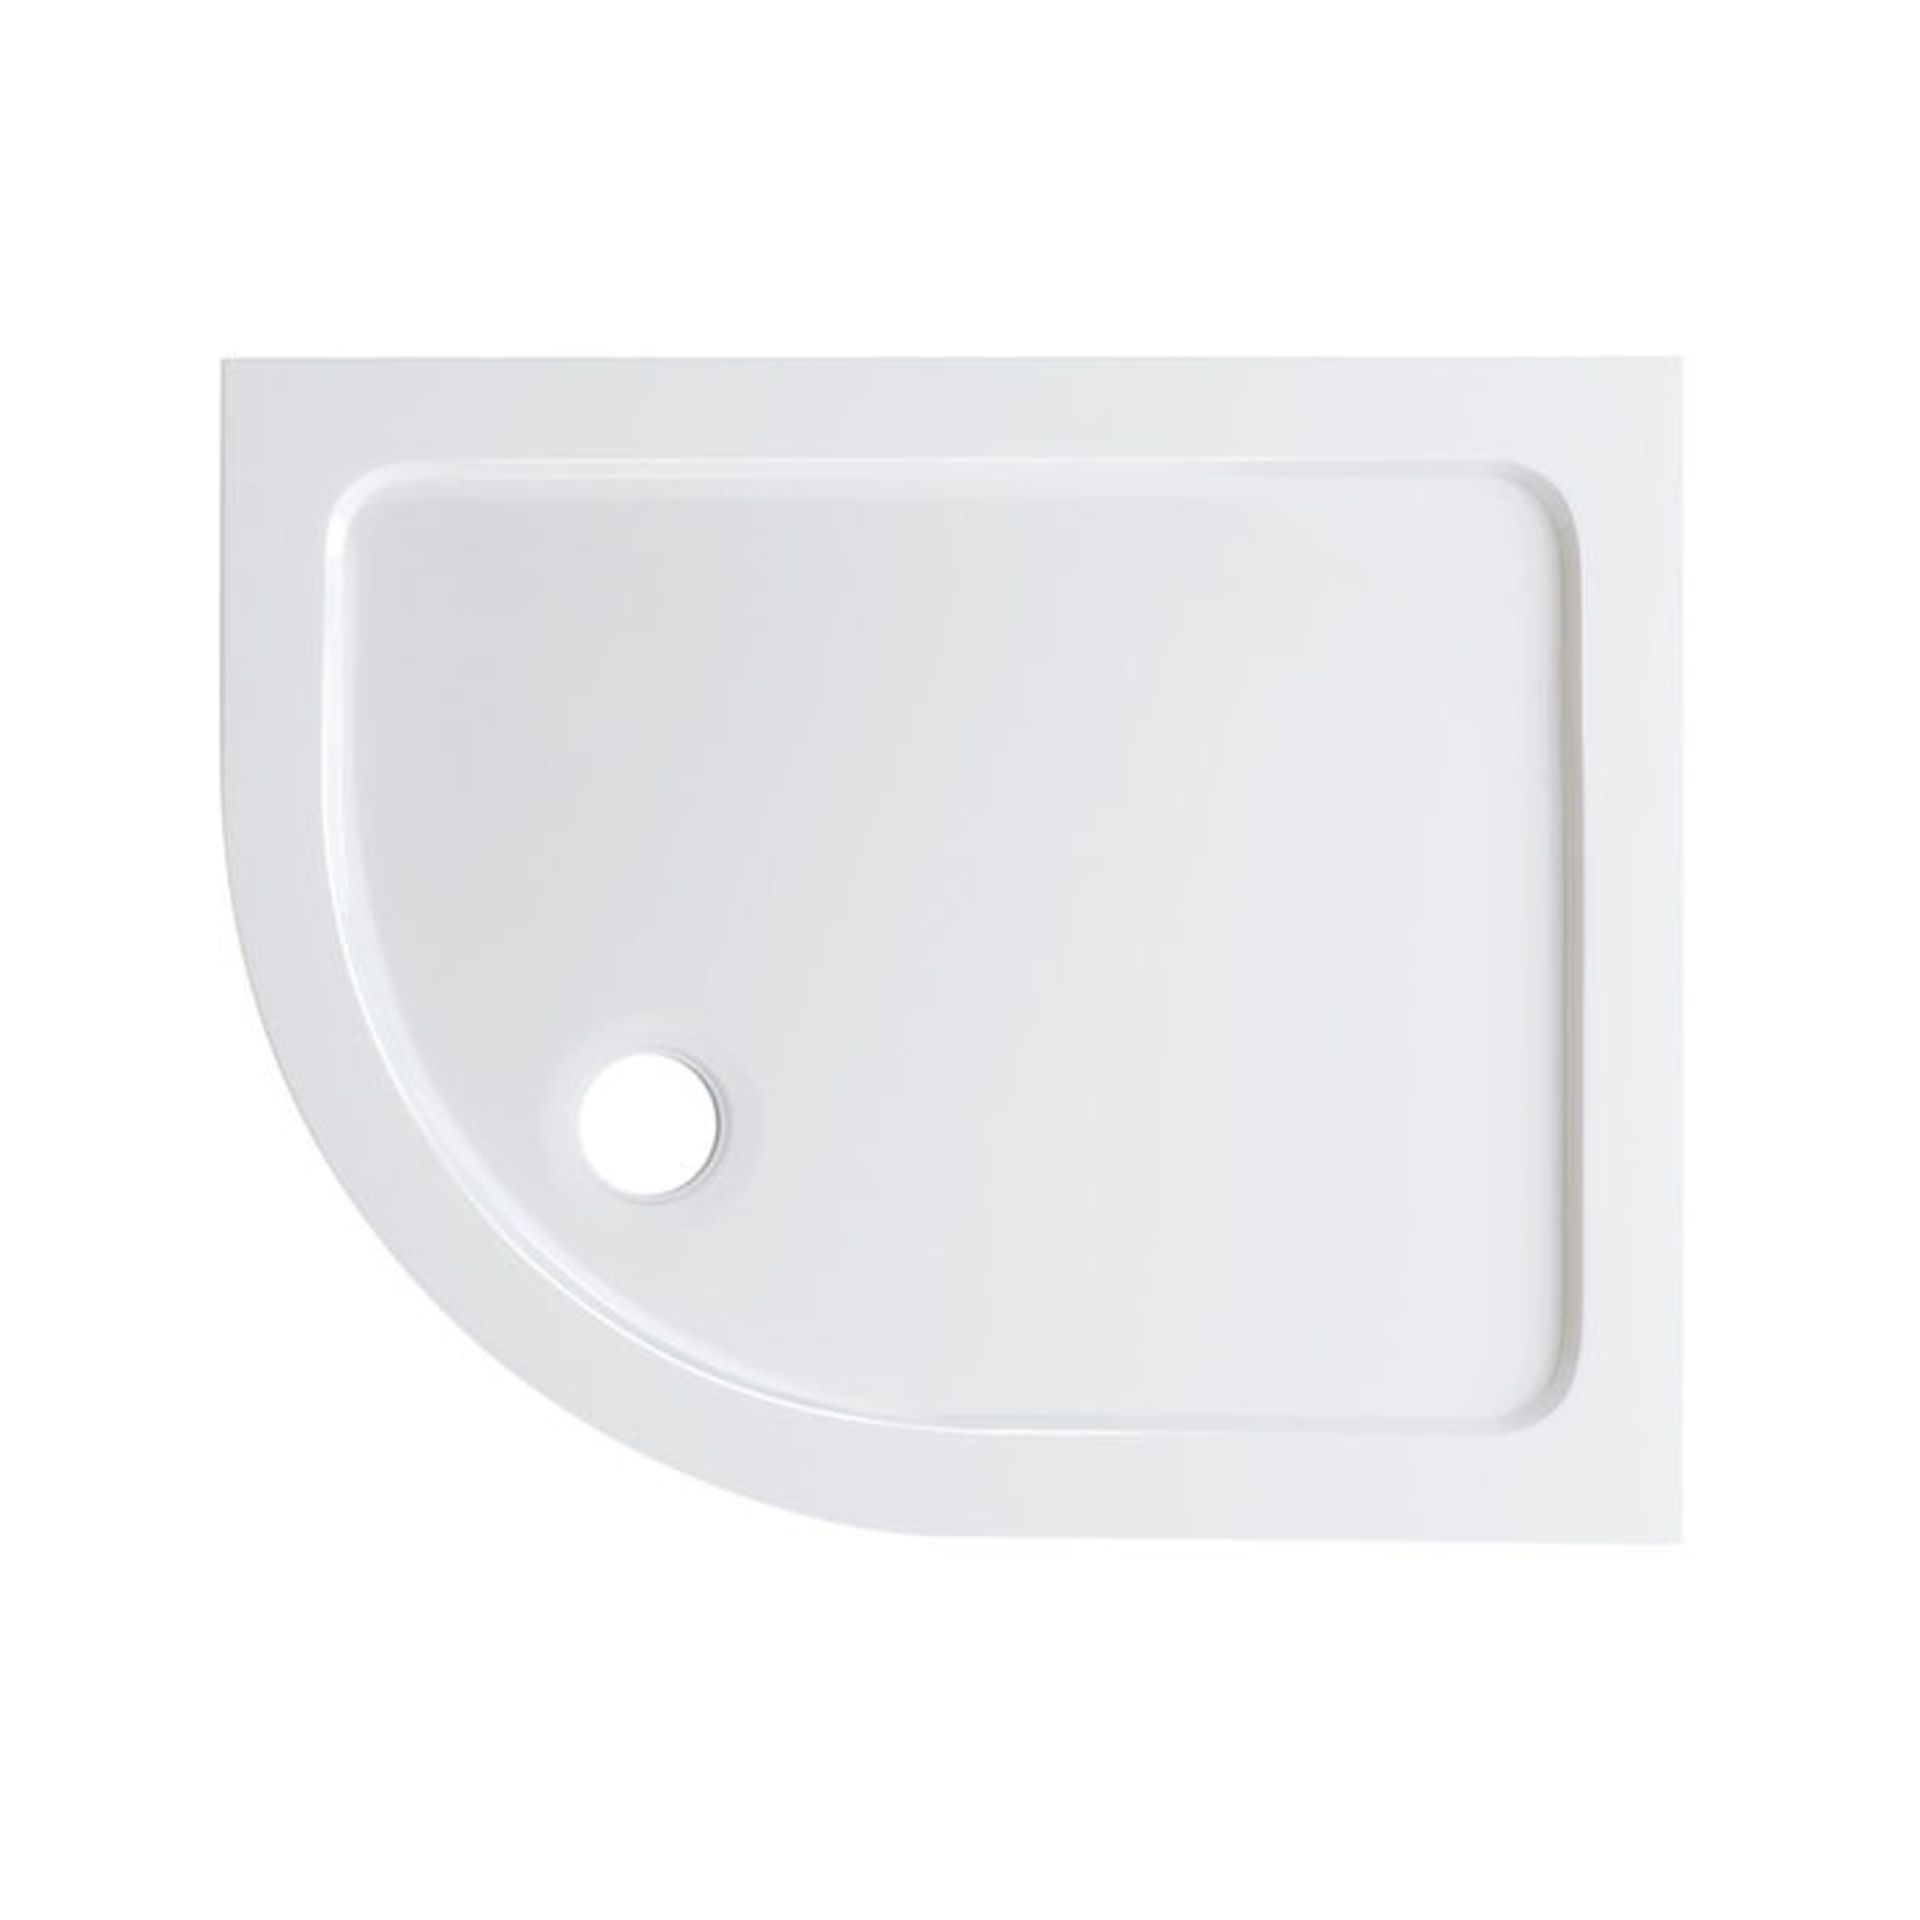 (NY38) 1000x800mm Offset Quadrant Ultra Slim Stone Shower Tray - Left. Low profile ultra slim design